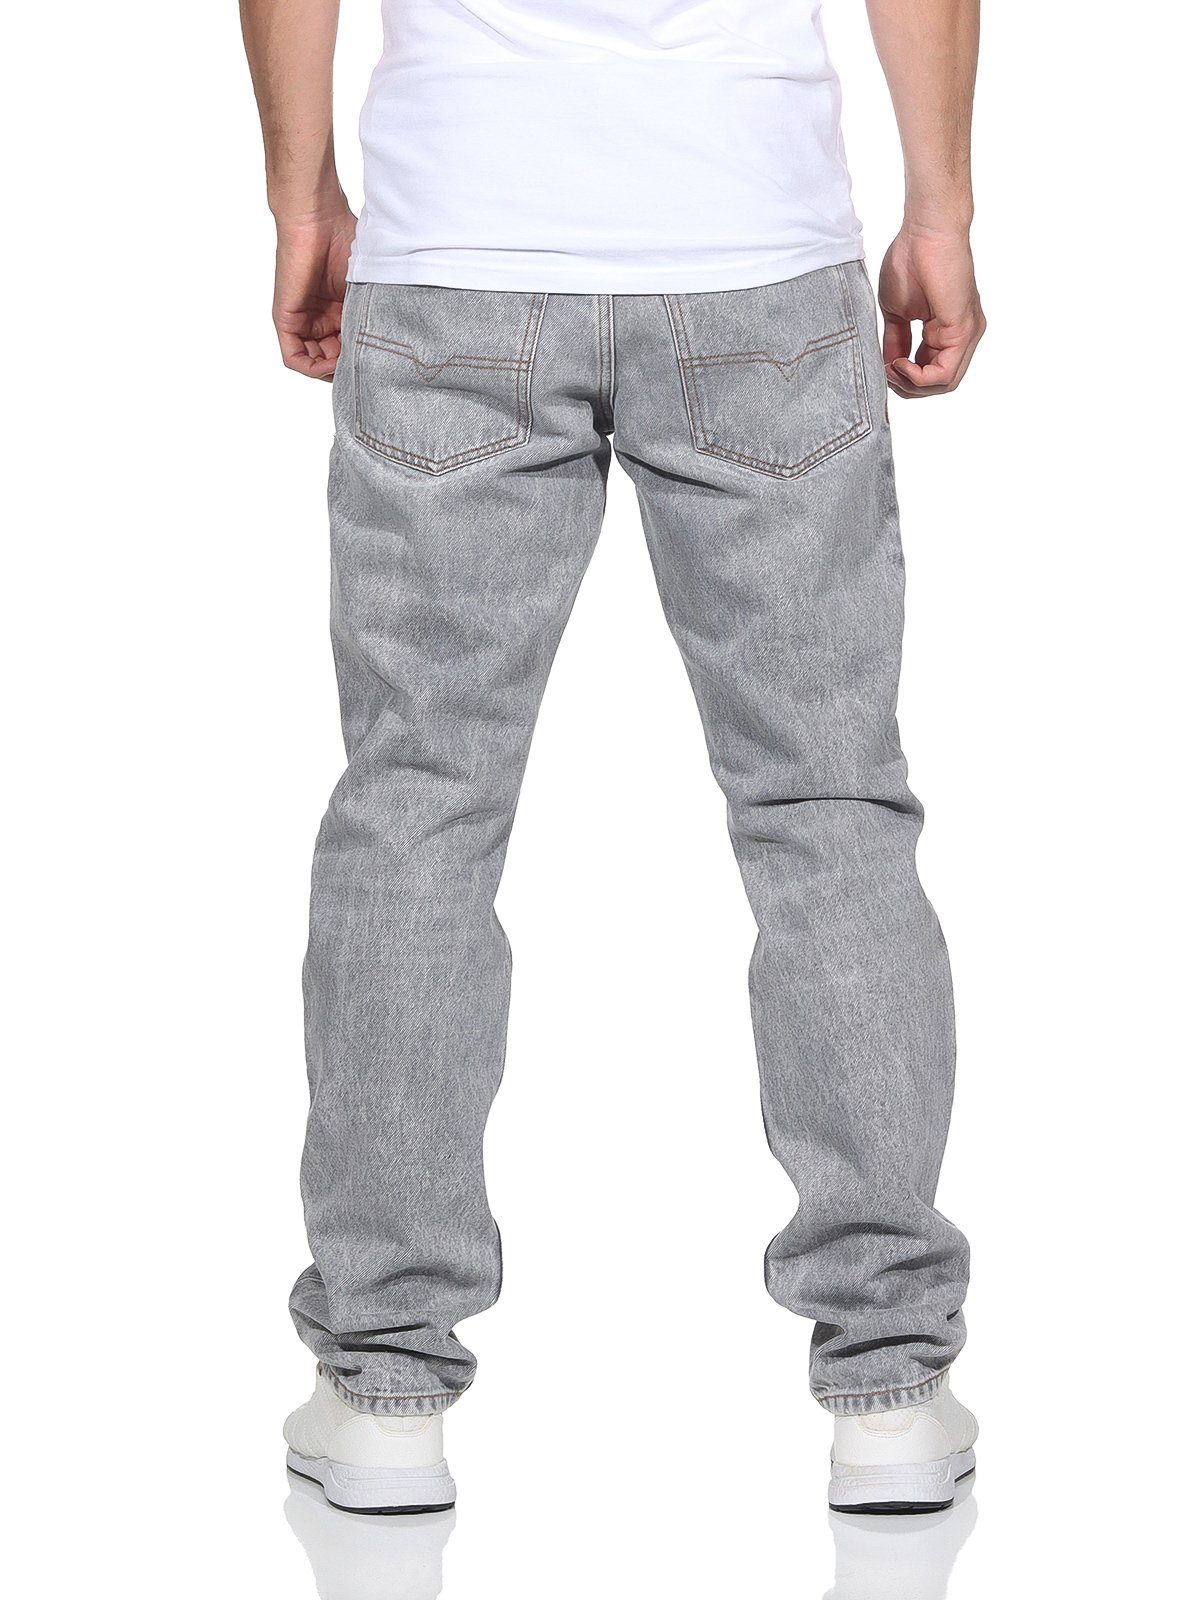 - Style, D-SARK Herren, Diesel Slim Grau, Herren 007D4 Dezenter MID Straight Jeans Diesel Leg Meliert, Used-Look, Gerade 5 Jeans Waist fit, - Pocket